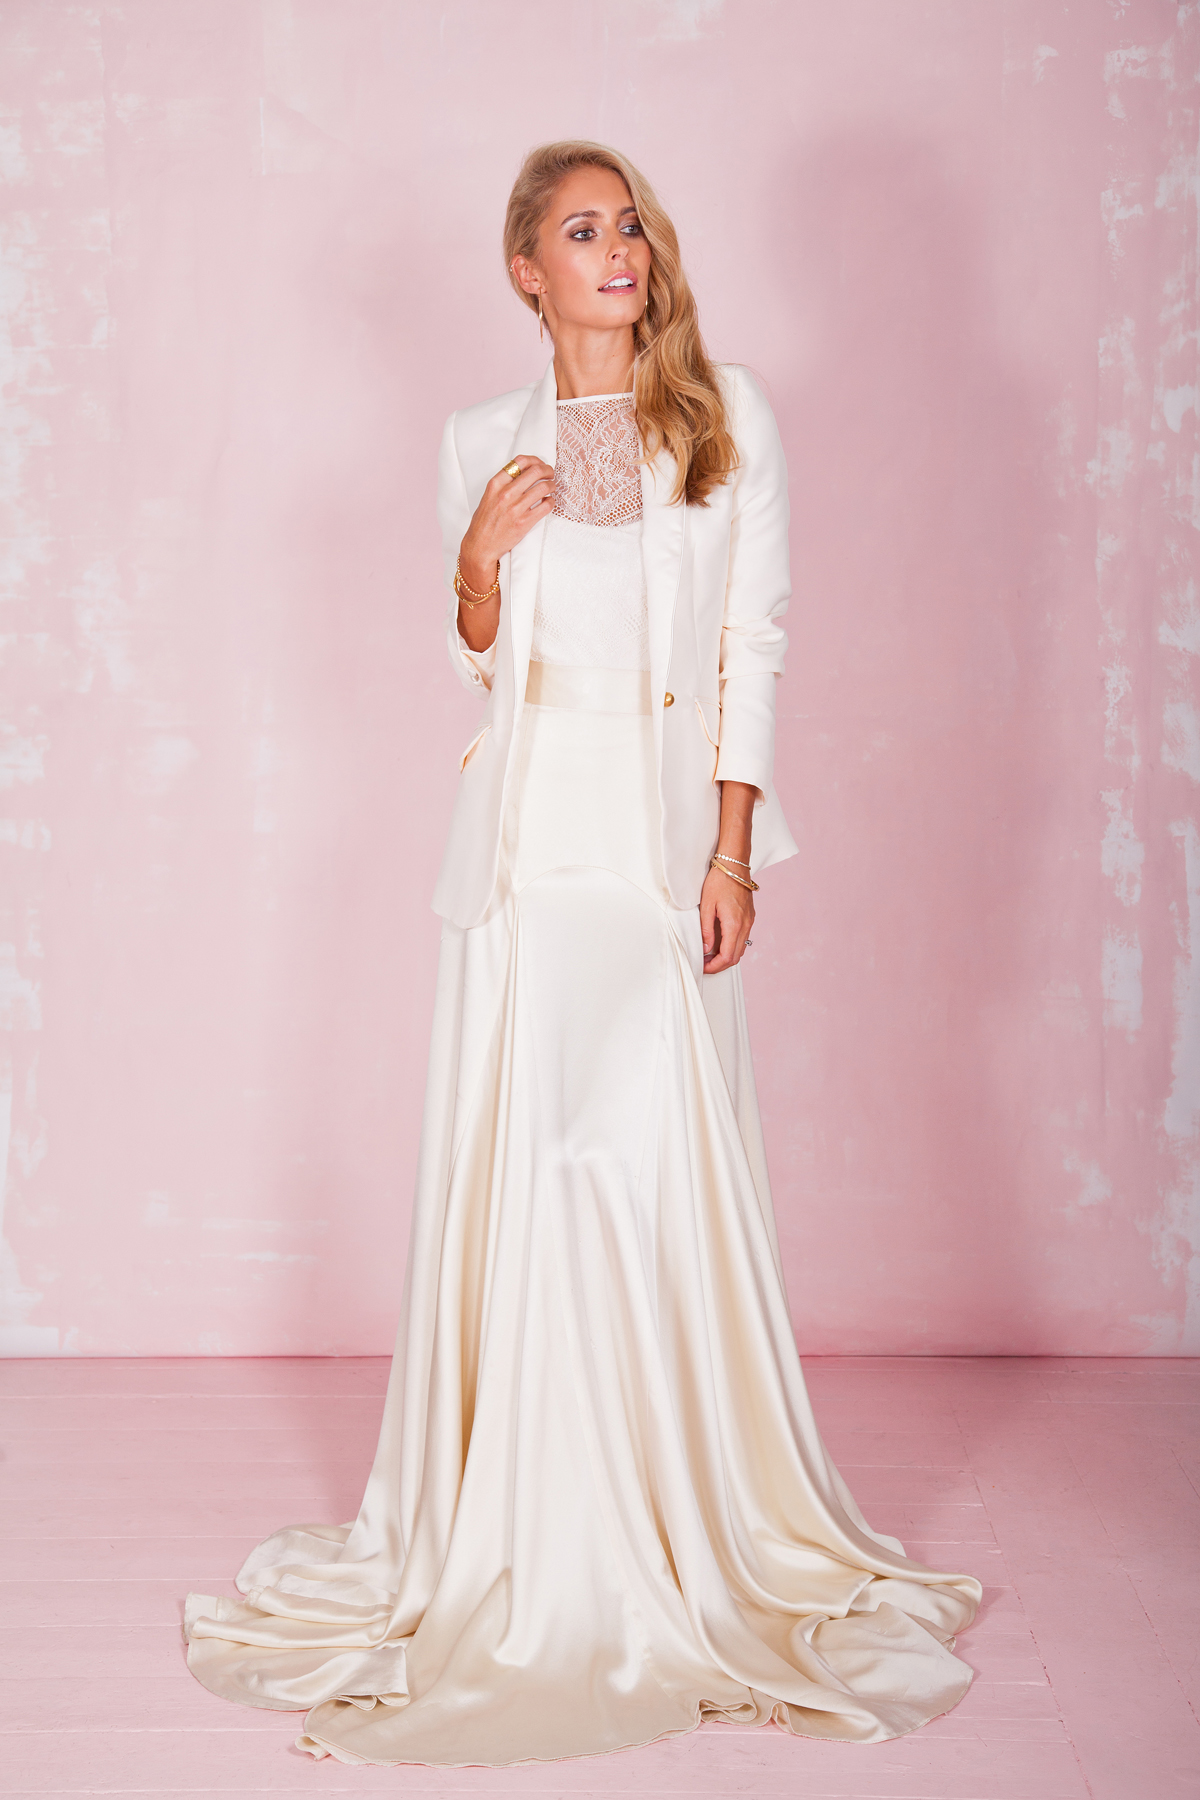 Belle & Bunty - Made To Order Wedding Dresses for Modern, Fashion Loving Brides